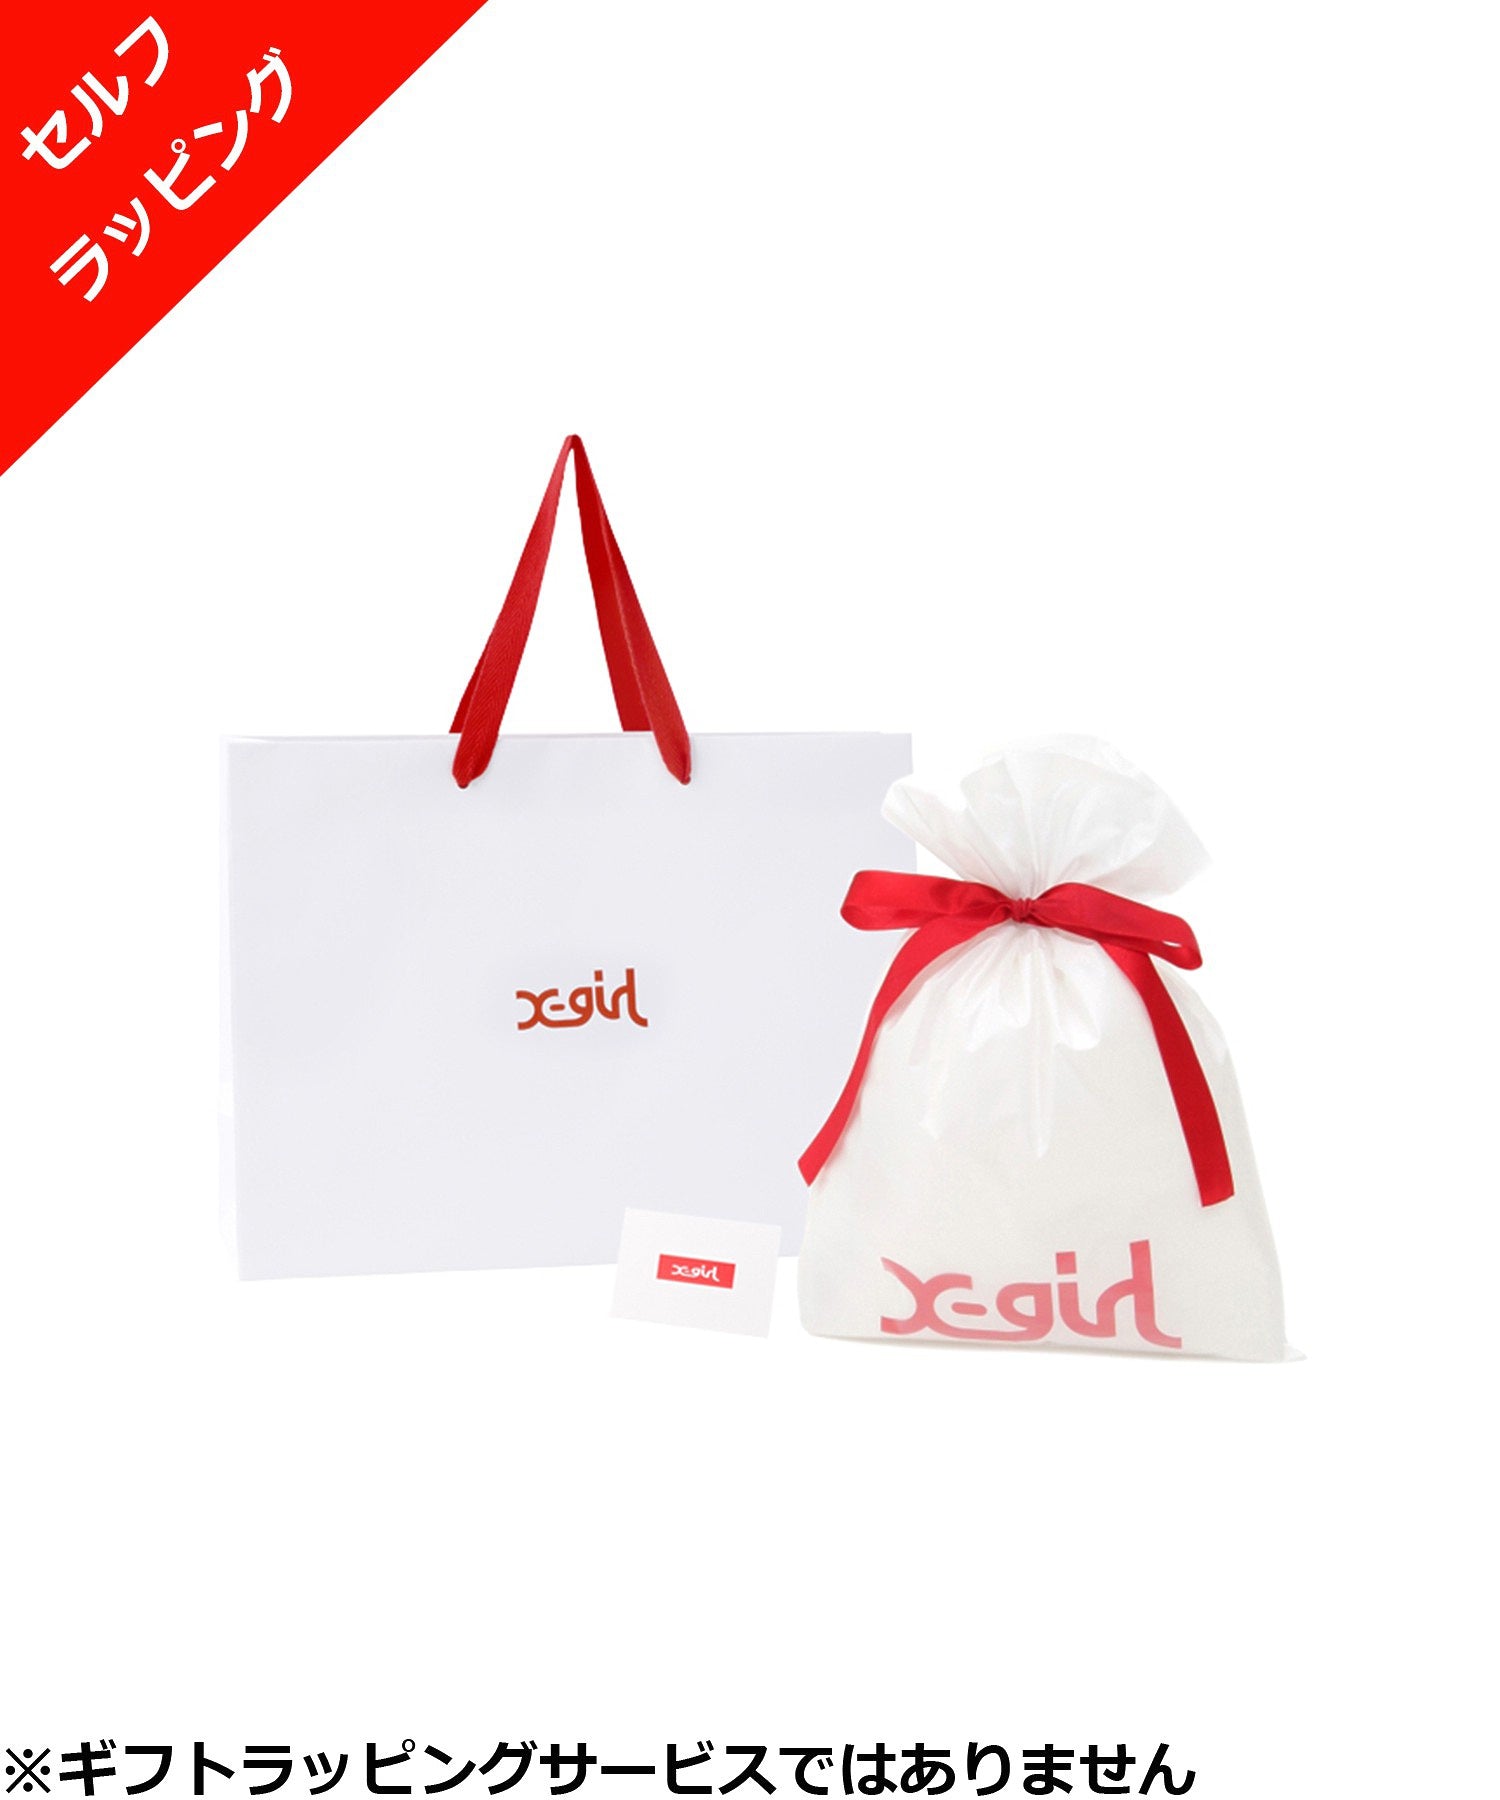 X-GIRL GIFT BAG SET W CALIF(XS) – calif